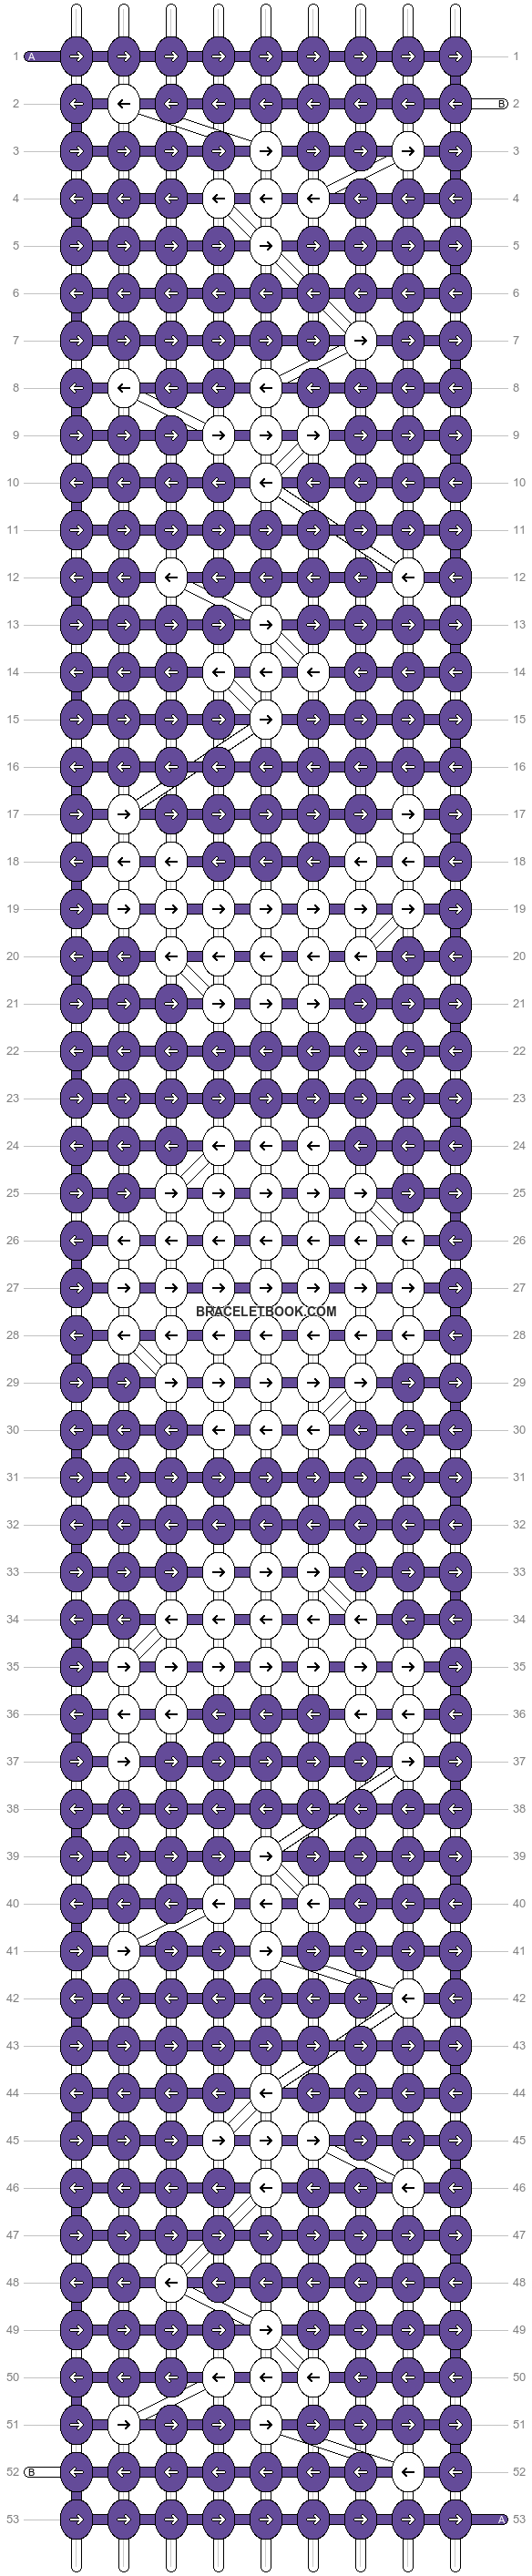 Alpha pattern #40067 variation #98516 pattern